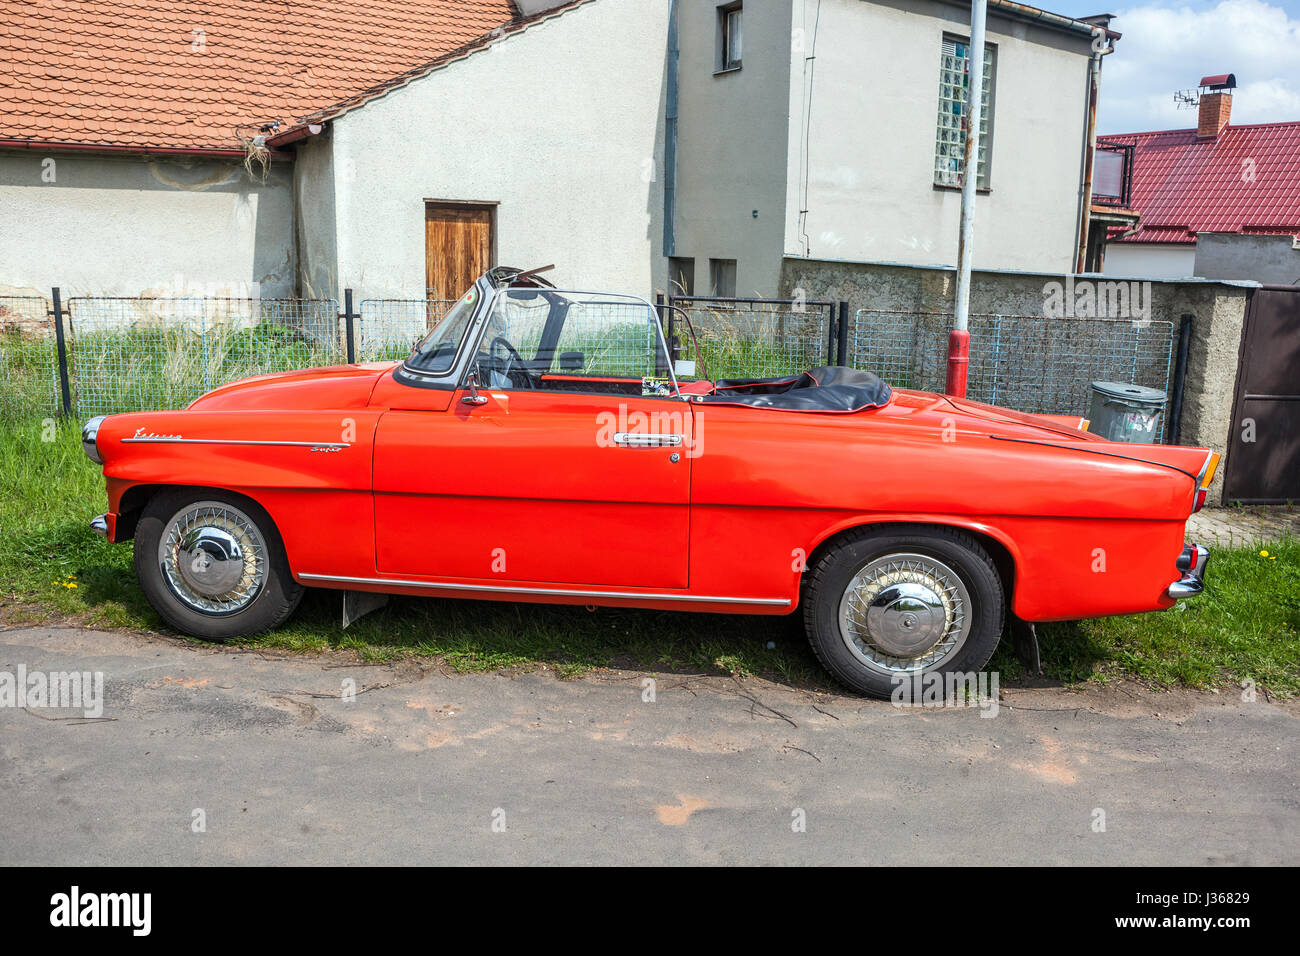 Skoda Felicia Cabrio, Red veteran car in Czech vilage, Czech Republic, Europe Czechoslovakia 1960s Stock Photo